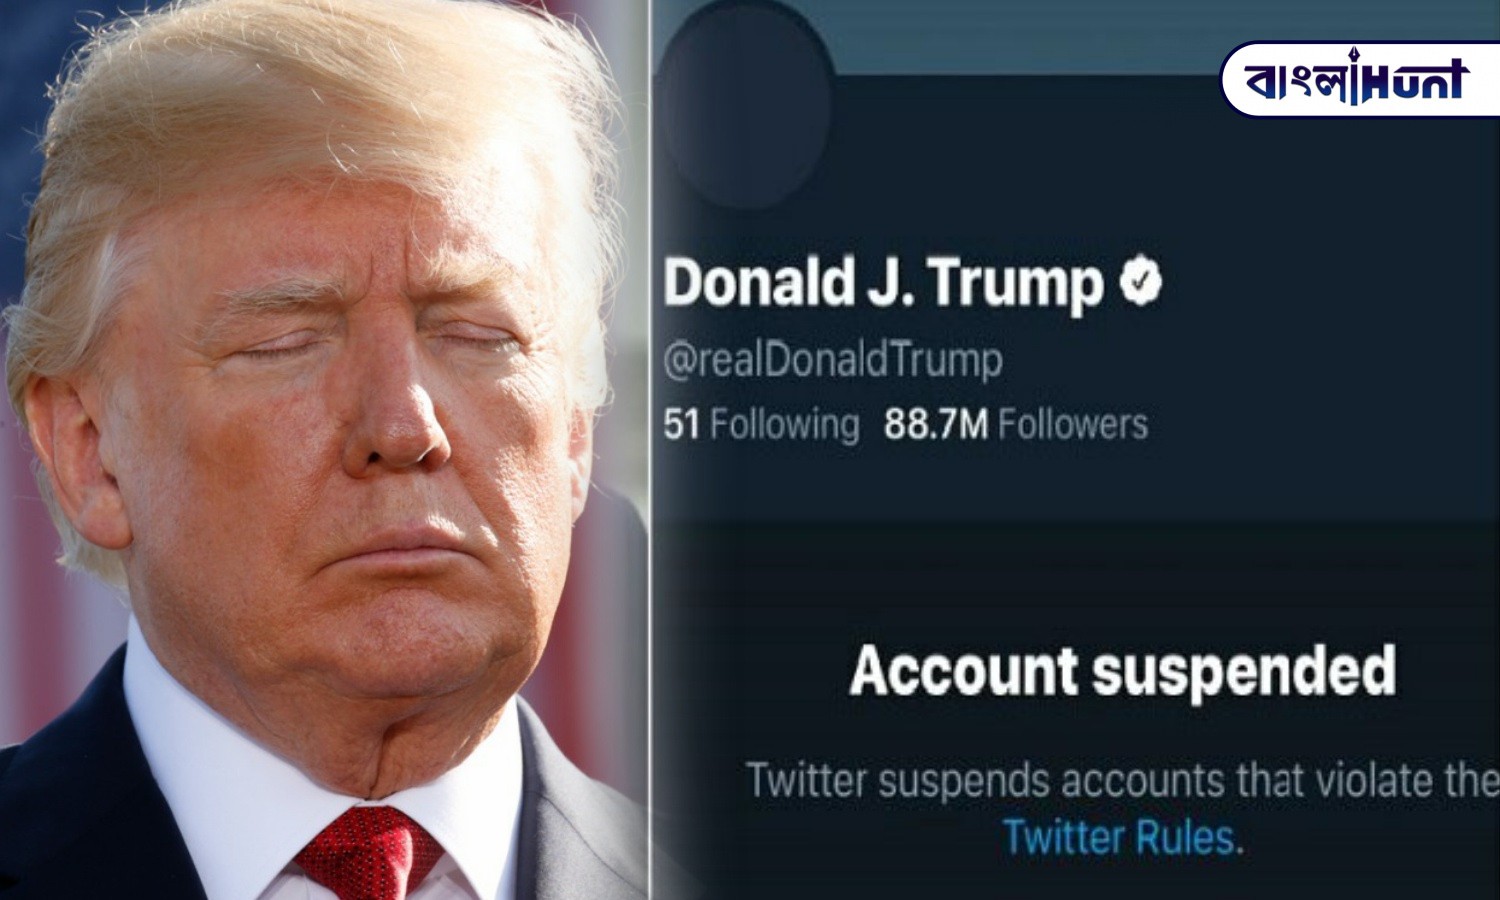 Donald Trump's Twitter account has been shut down by Twitter authorities